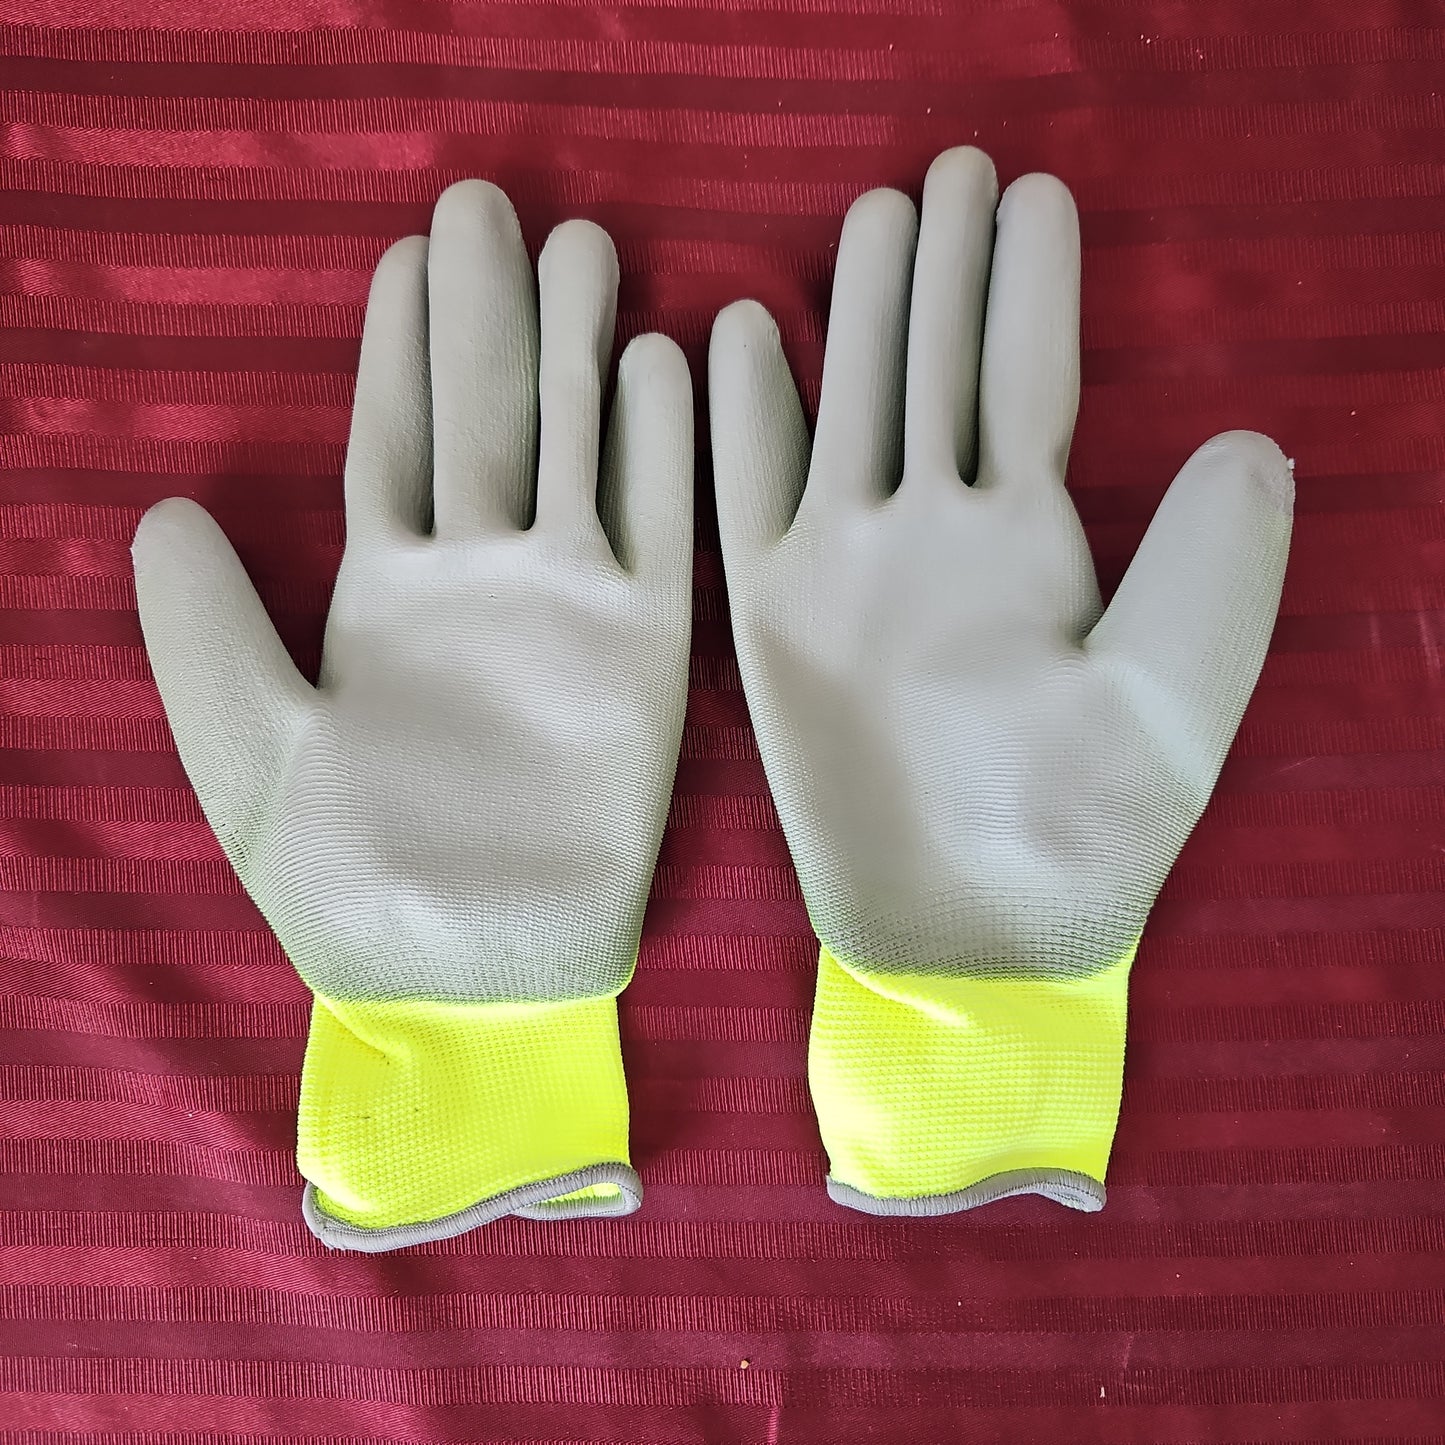 Par de guantes de trabajo de poliuretano (Talla L) - West Chester (Nuevo)